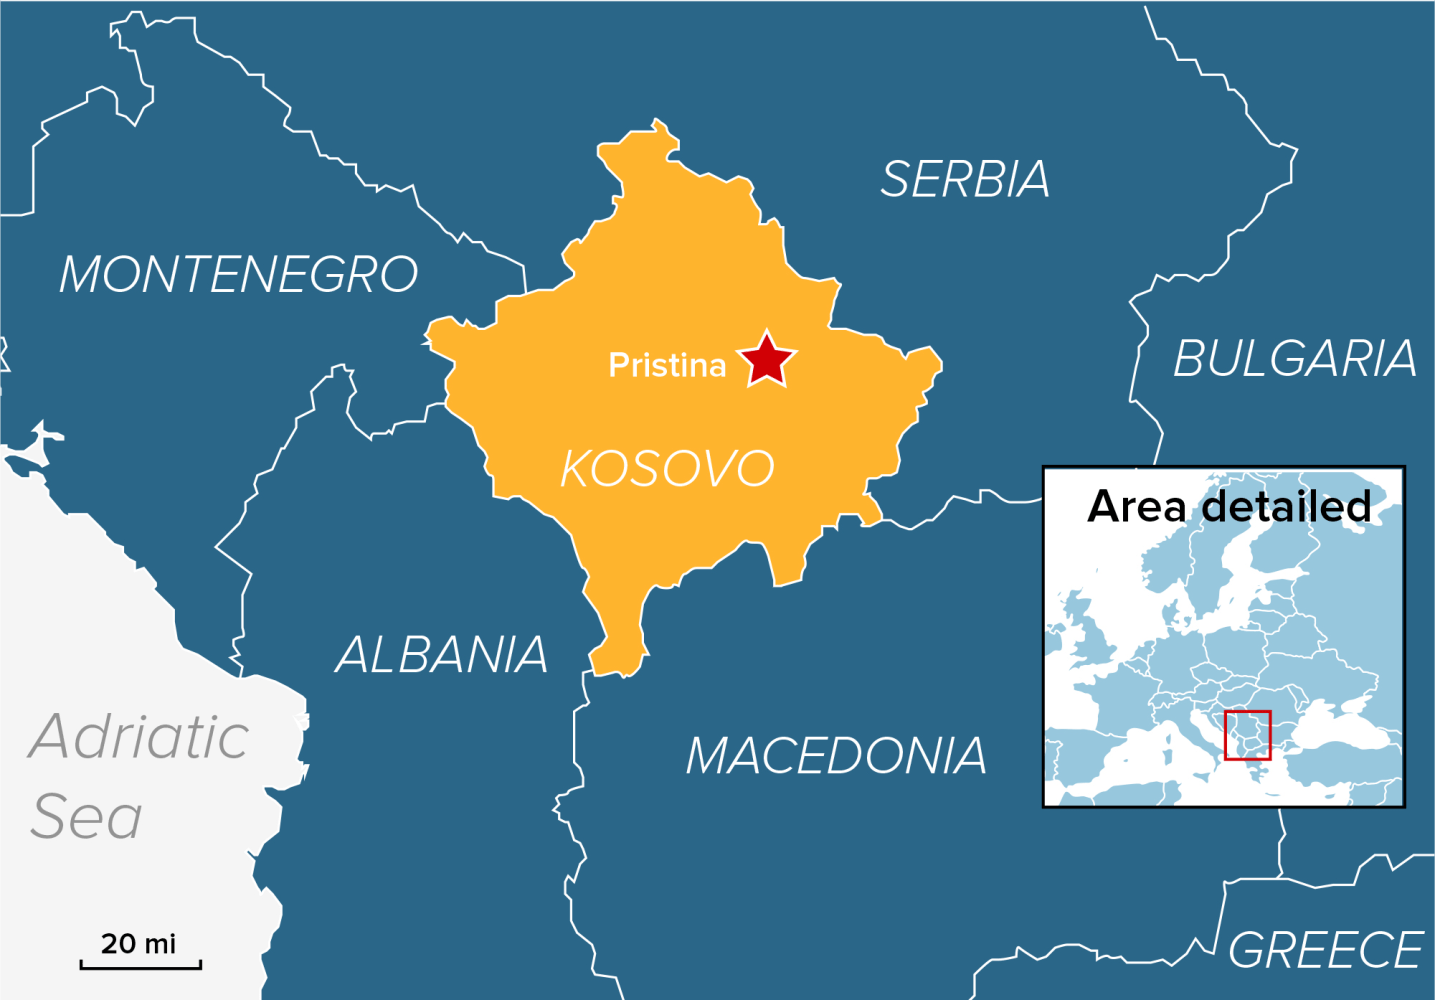 Gallery Photos of "Kosovo Map" .